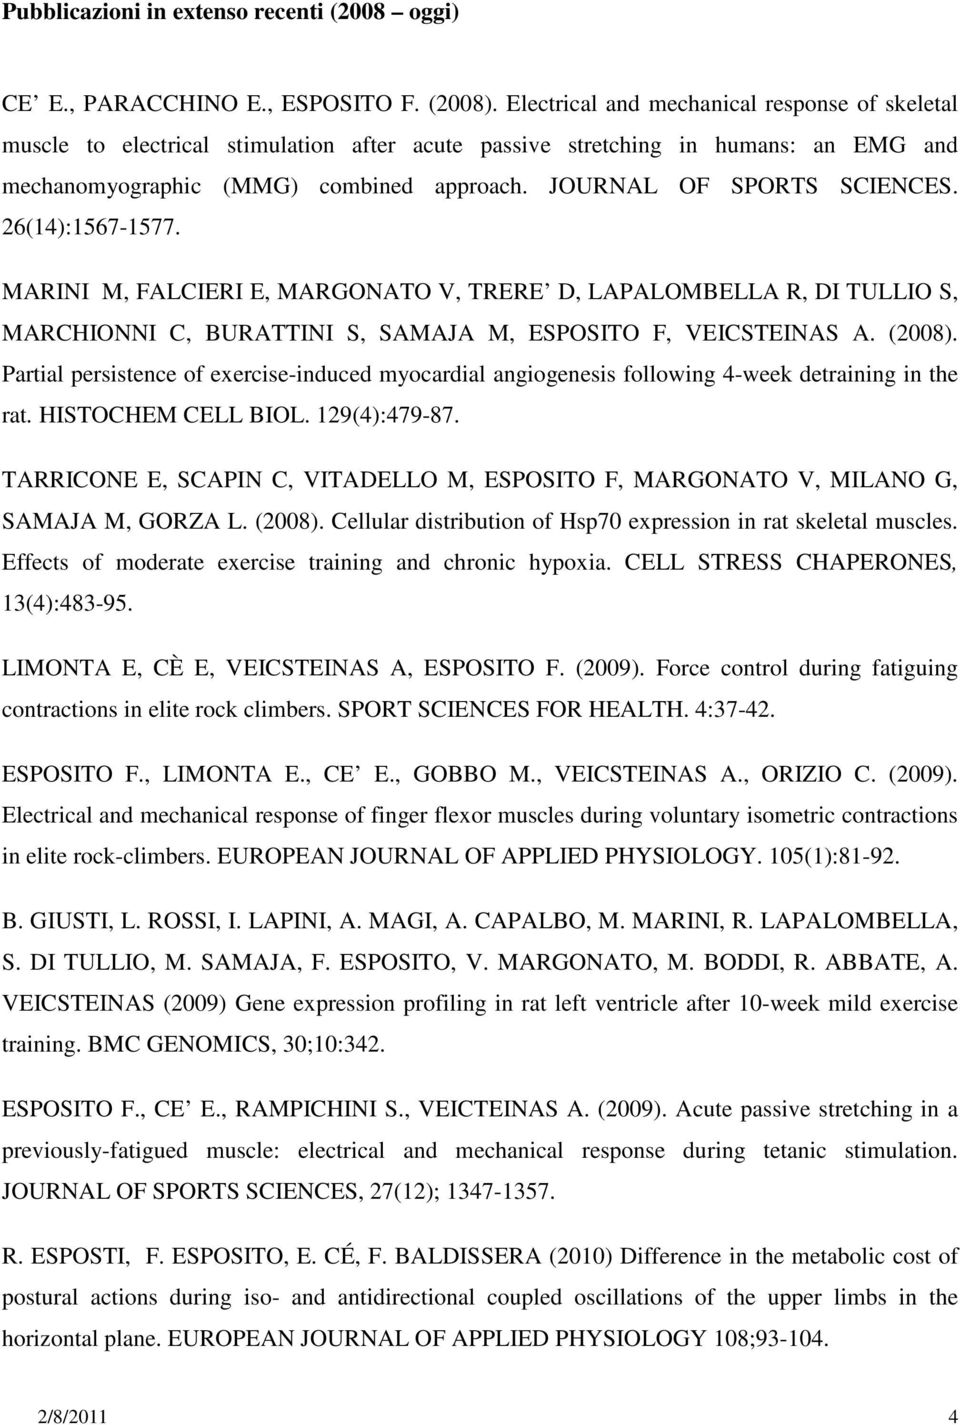 JOURNAL OF SPORTS SCIENCES. 26(14):1567-1577. MARINI M, FALCIERI E, MARGONATO V, TRERE D, LAPALOMBELLA R, DI TULLIO S, MARCHIONNI C, BURATTINI S, SAMAJA M, ESPOSITO F, VEICSTEINAS A. (2008).